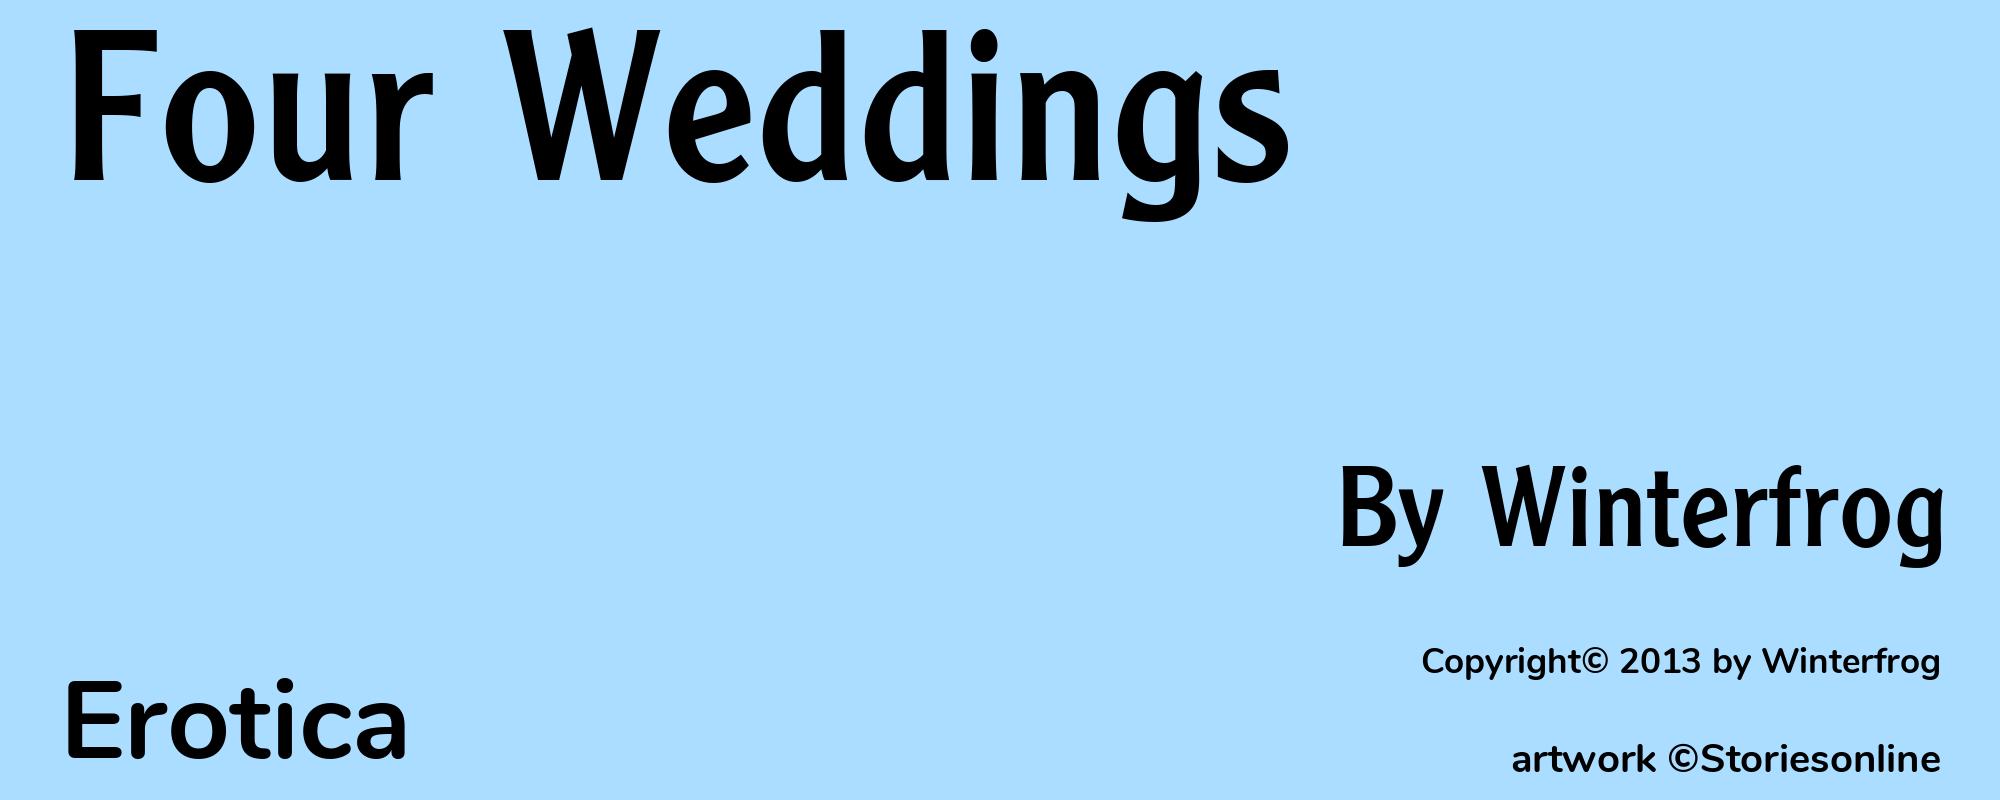 Four Weddings - Cover